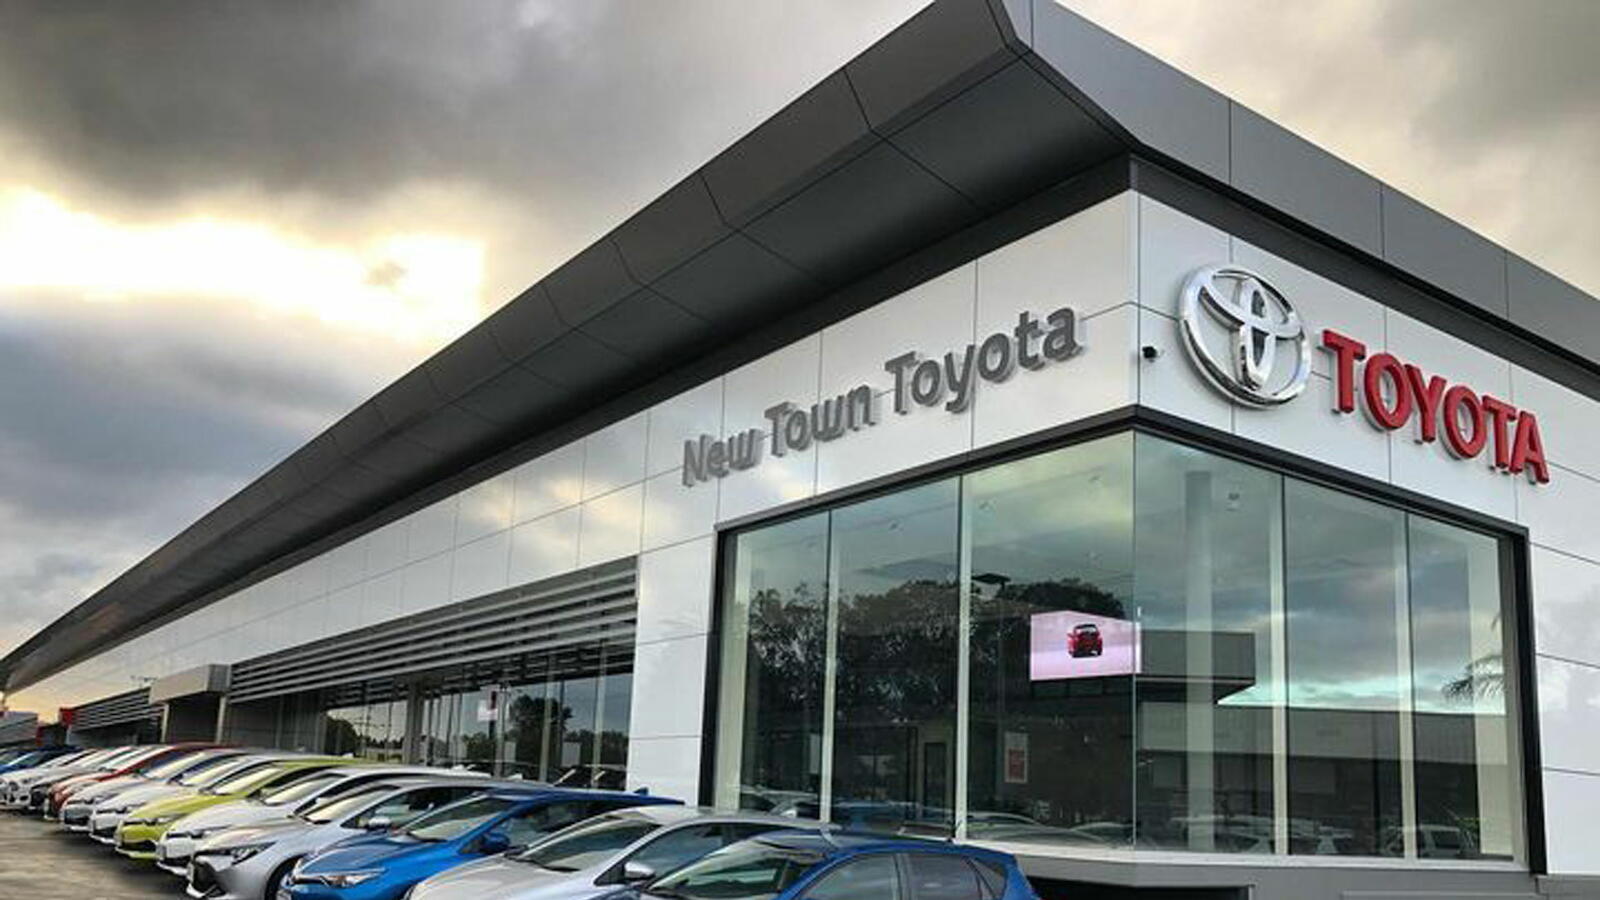 New Town Toyota - Perth Australia